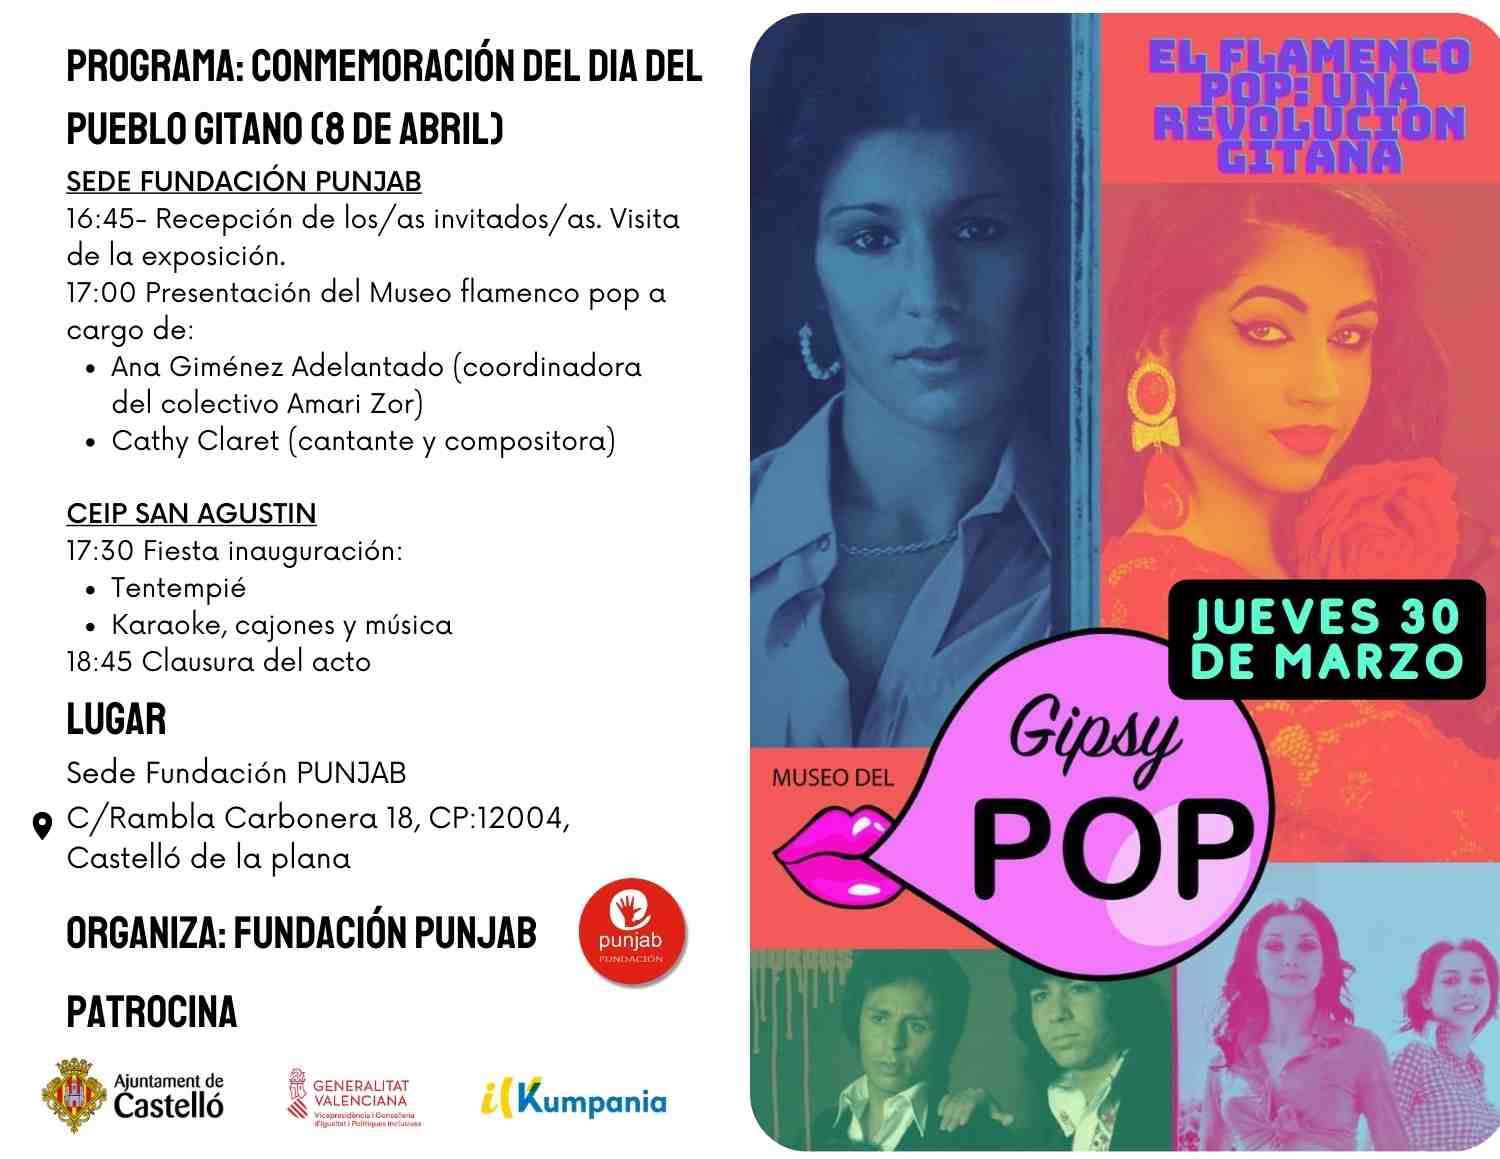 Inauguracion-Museo-Flameno-pop-30-marzo